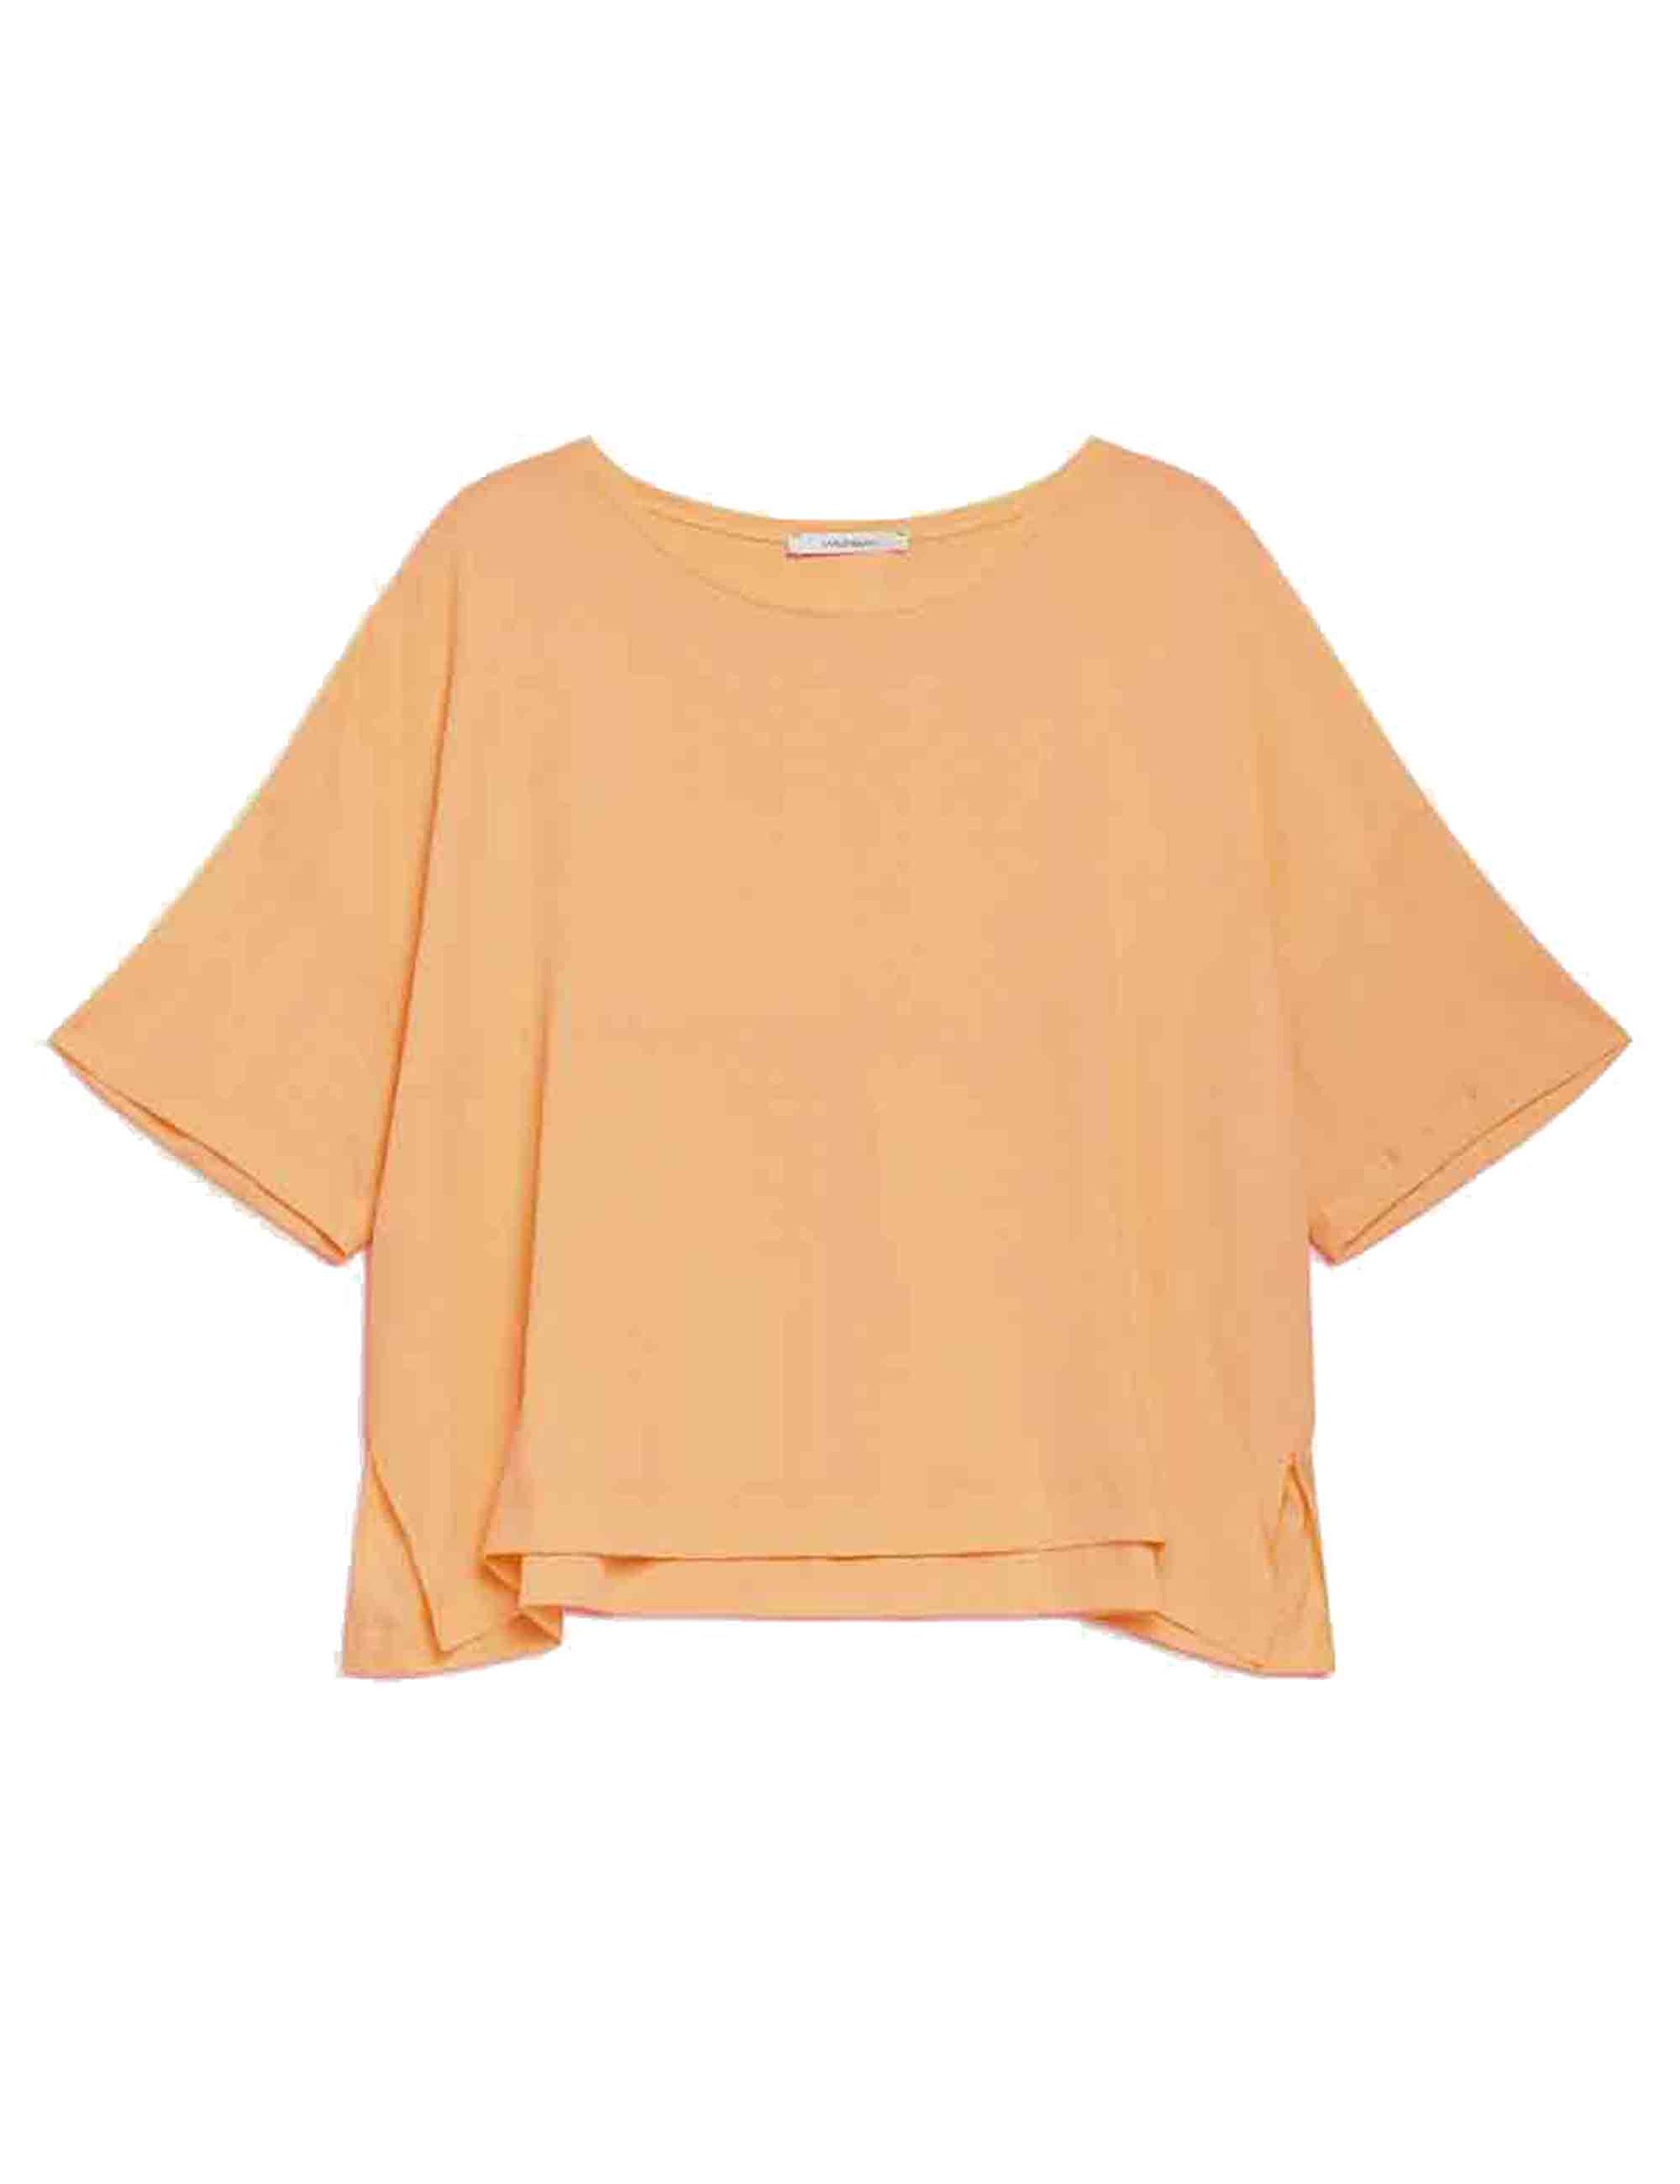 Fluide Crepe women's shirts in orange silk